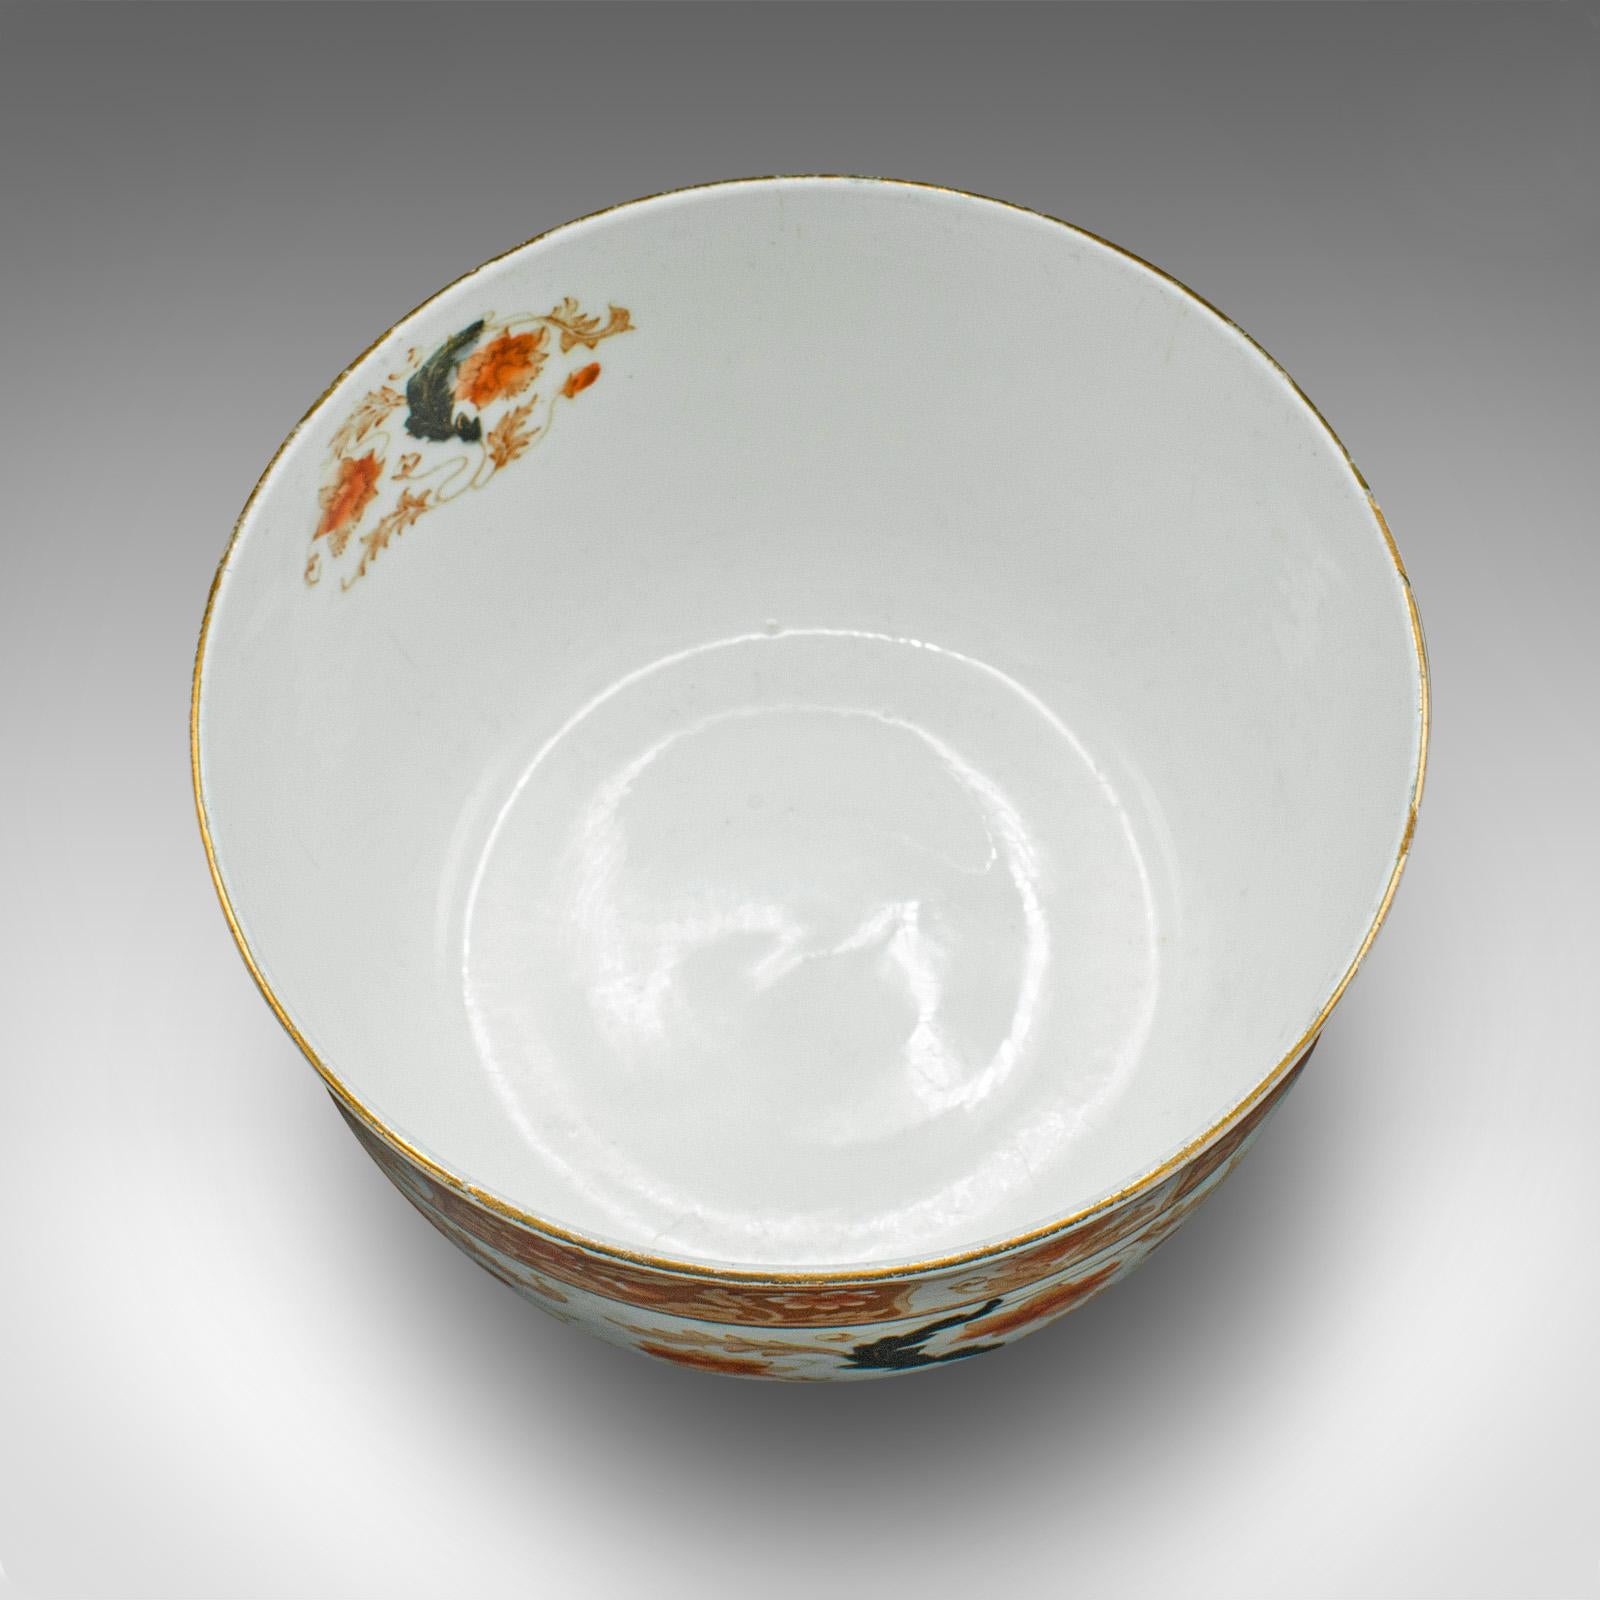 19th Century Antique Decorative Bowl, Continental, Ceramic, Serving Dish, Victorian, C.1900 For Sale